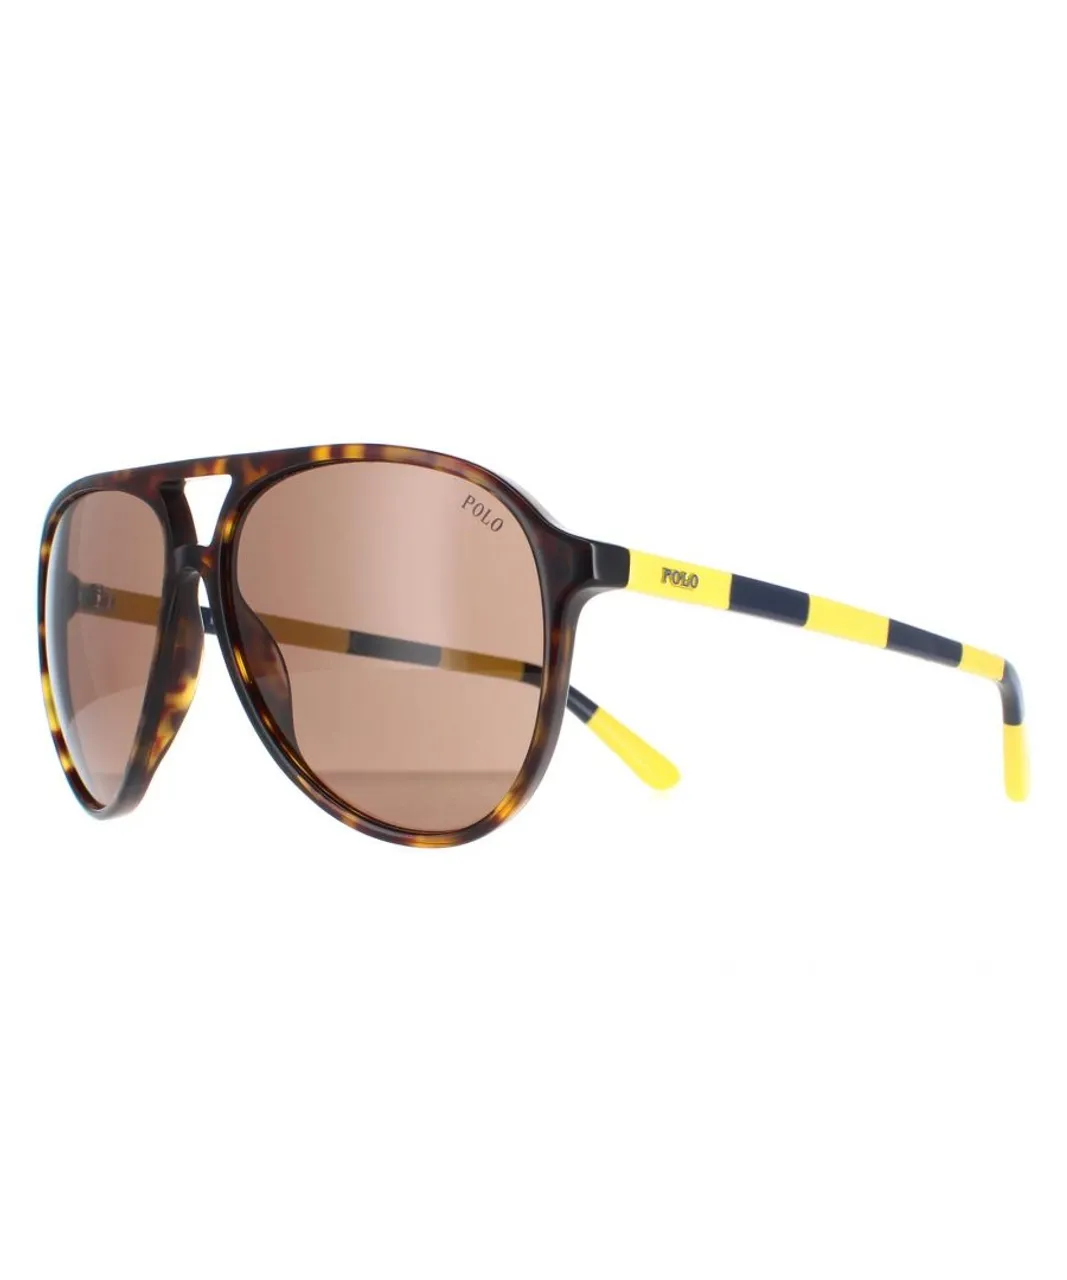 Polo Ralph Lauren Aviator Mens Shiny Dark Havana Brown Sunglasses - One